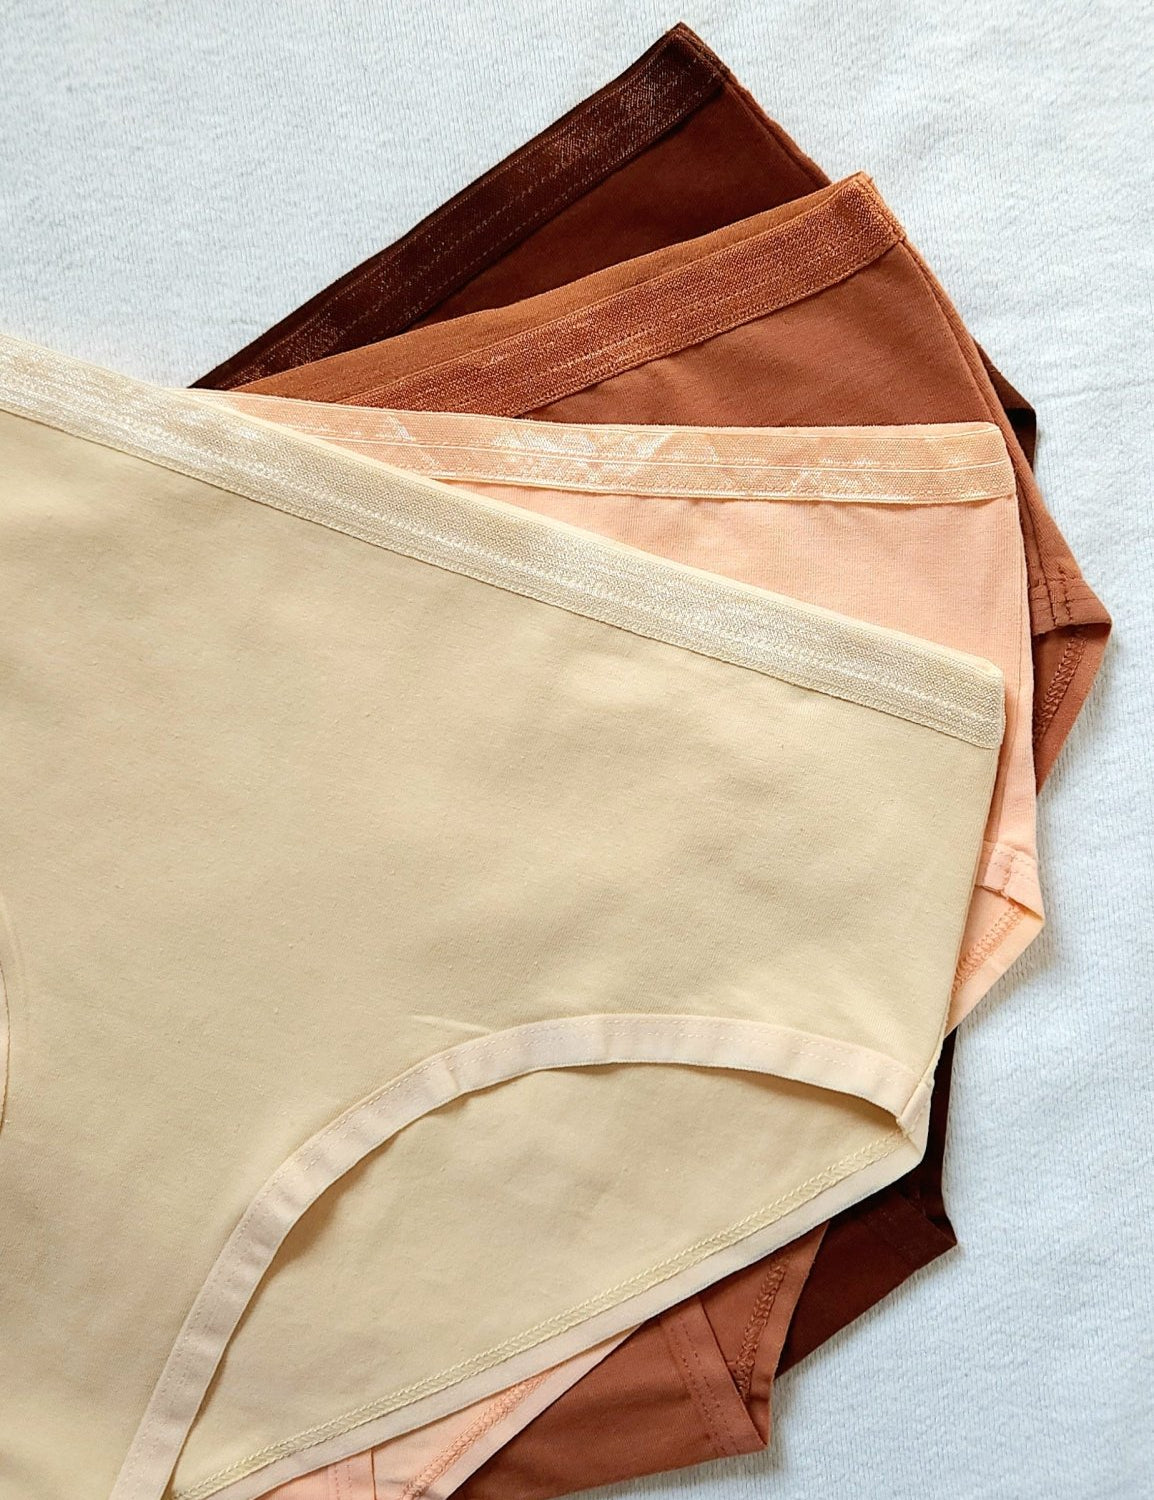 Buy Organic Seamless Womens Underwear Mid Waist Briefs Panty Solid